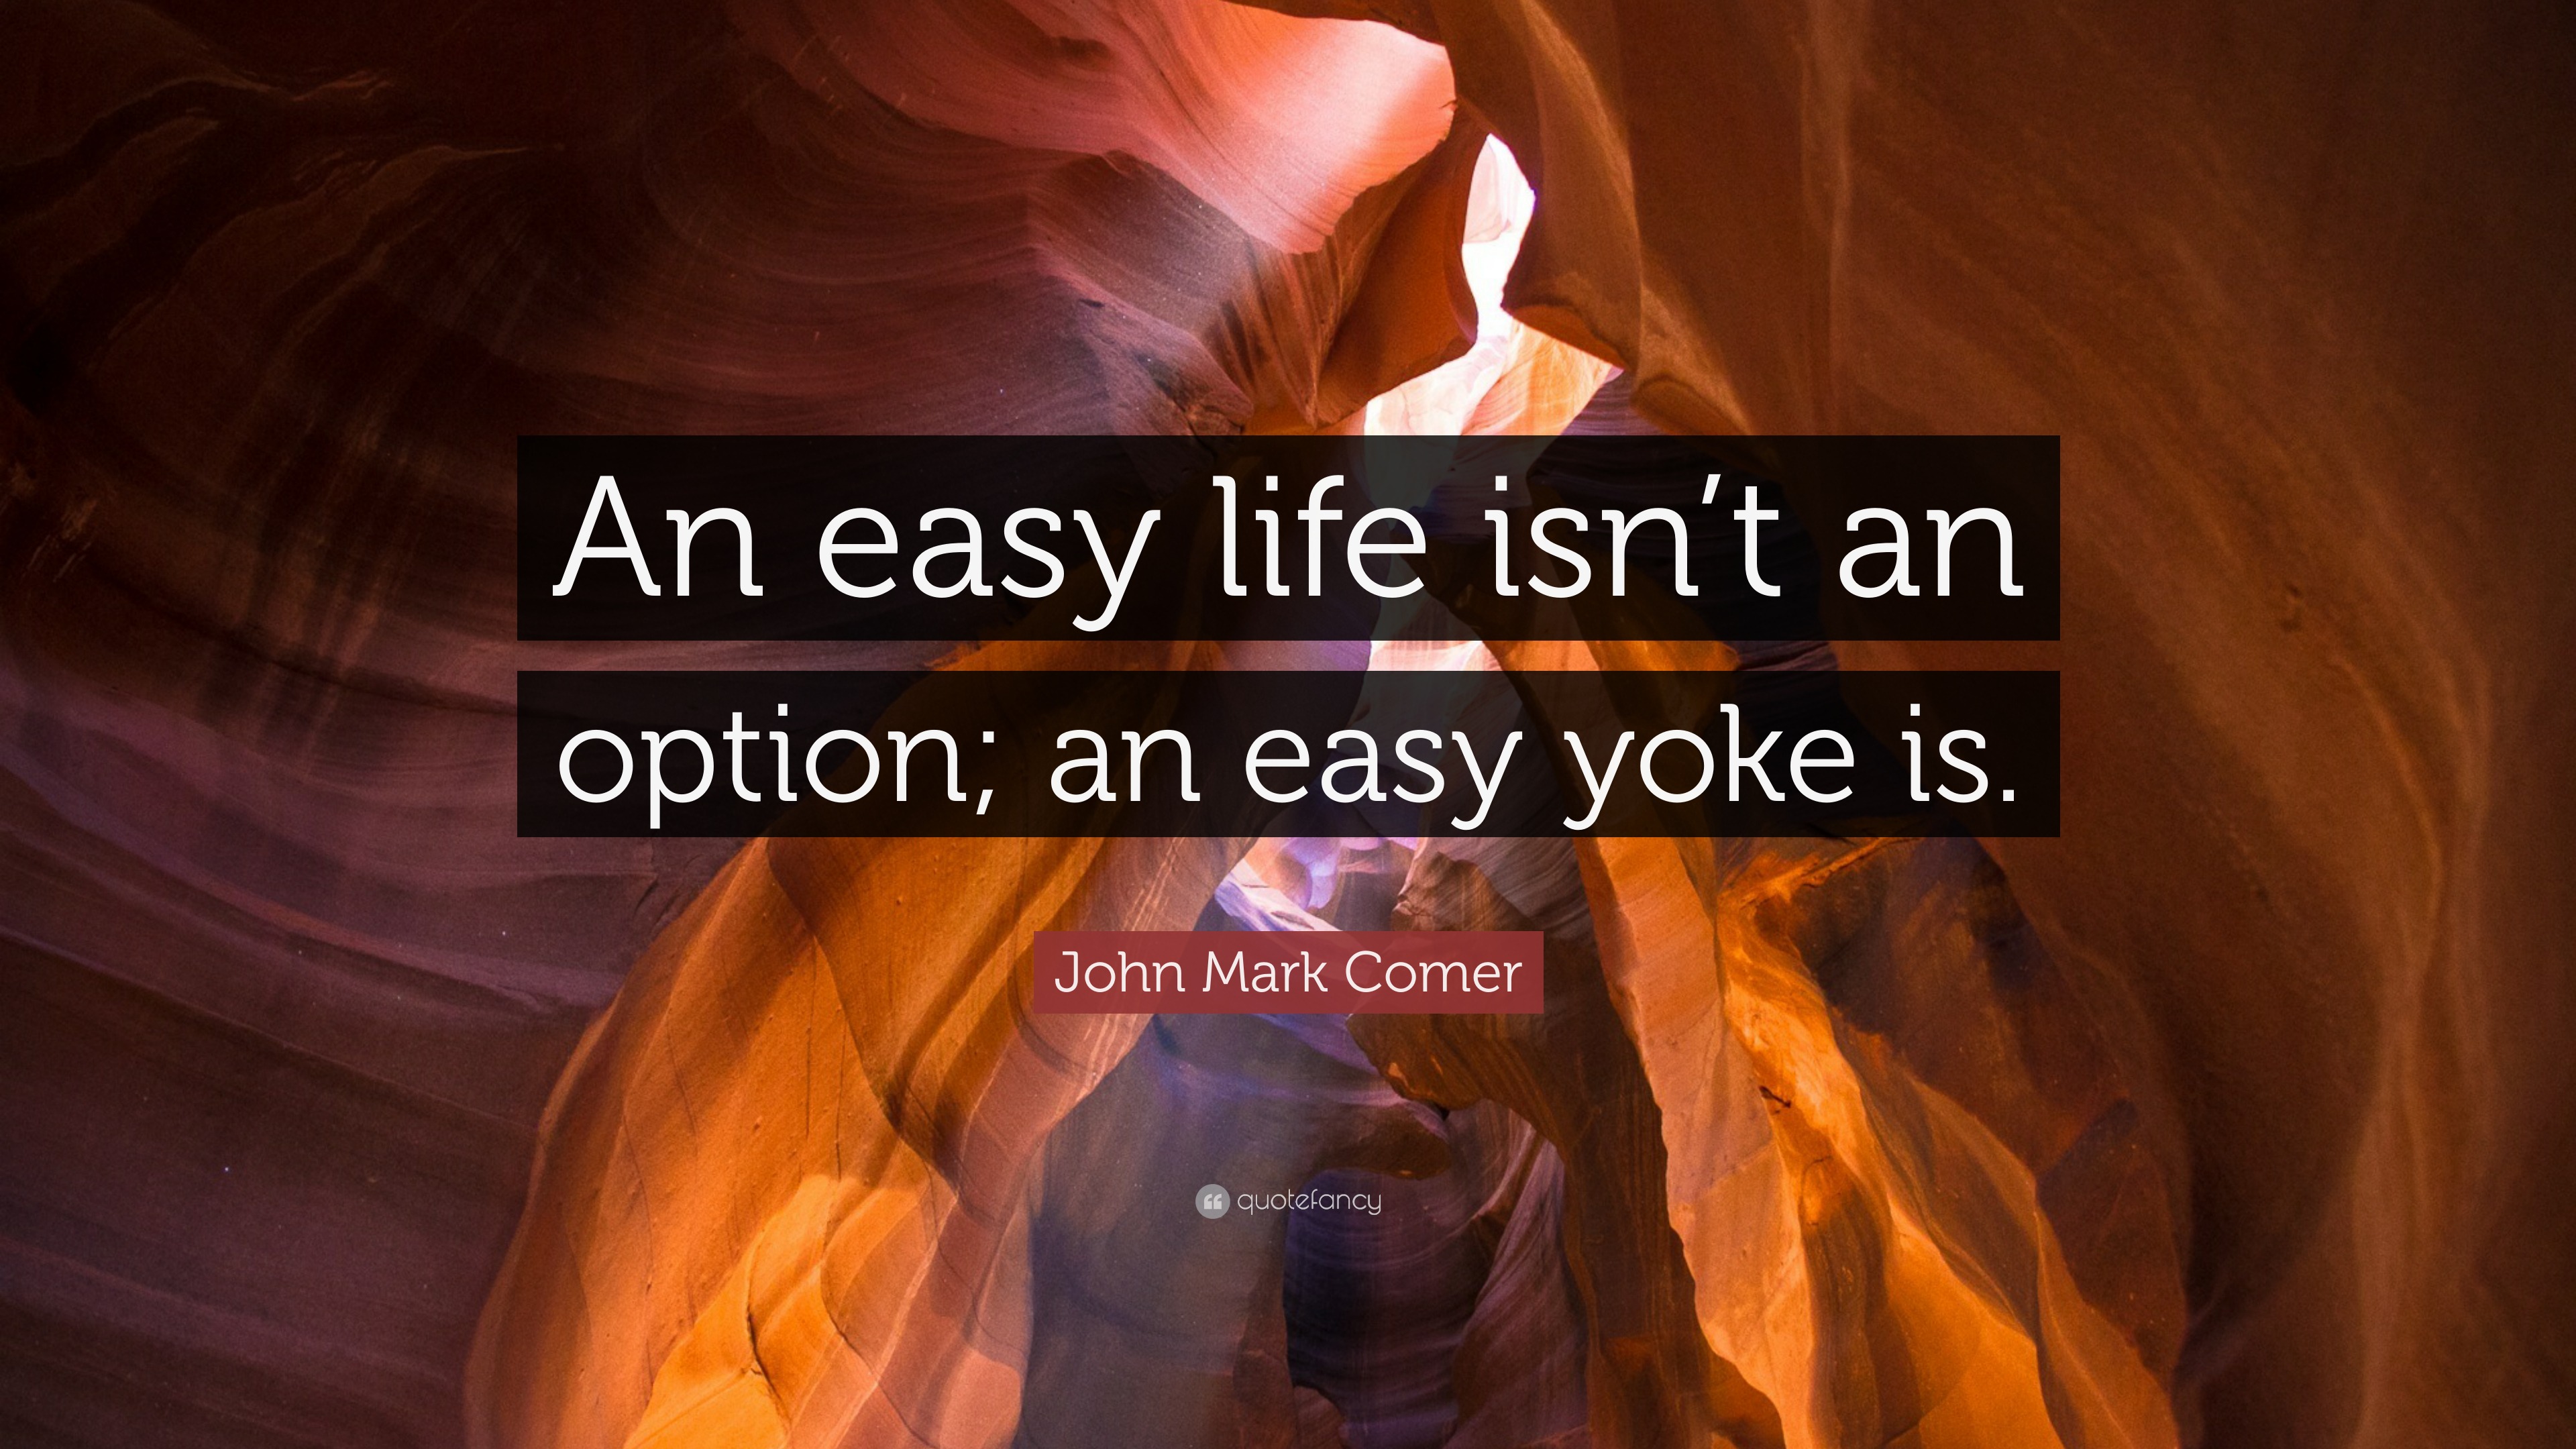 John Mark Comer Quote: “An easy life isn't an option; an easy yoke